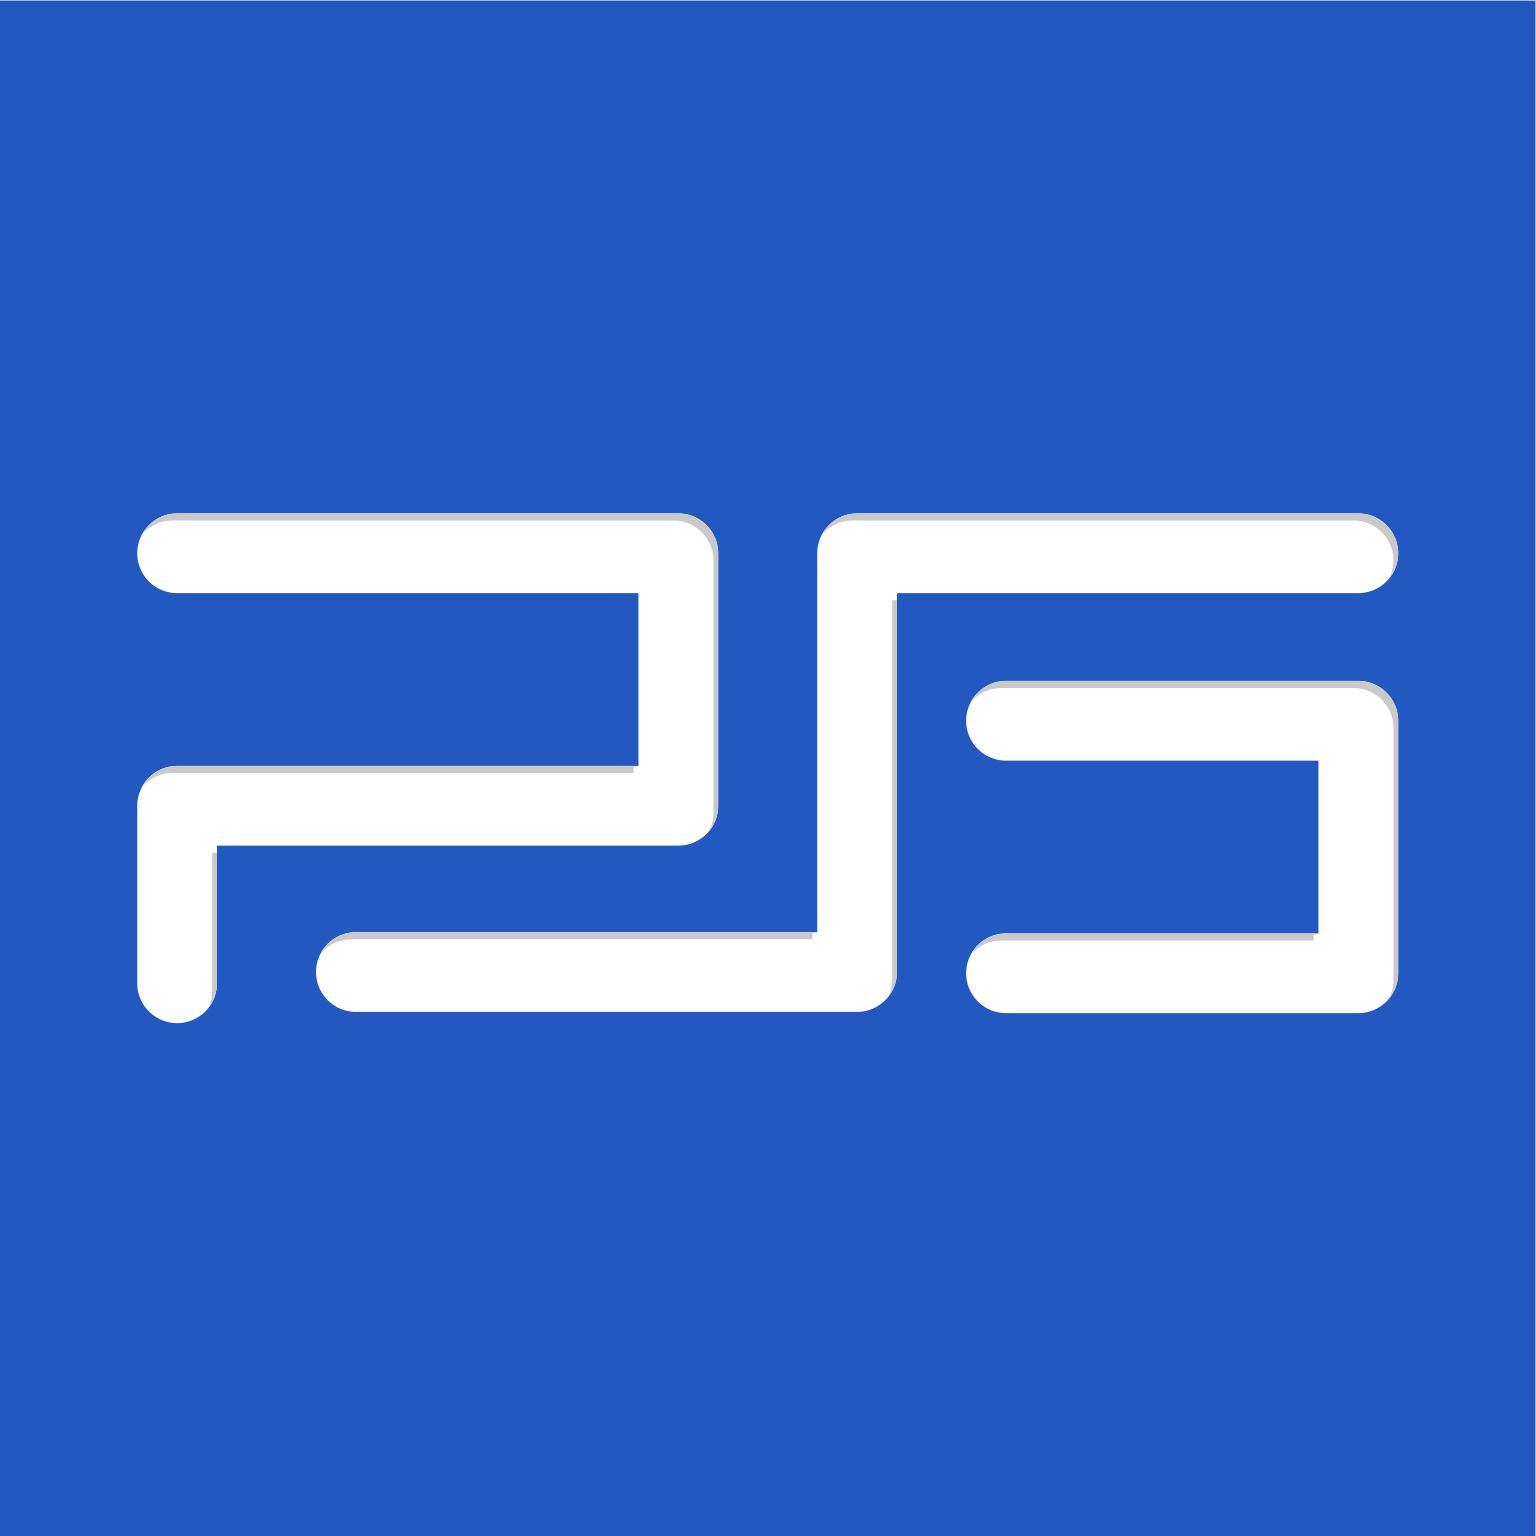 PS5 logo concept | MASTROiNCHIOSTRO